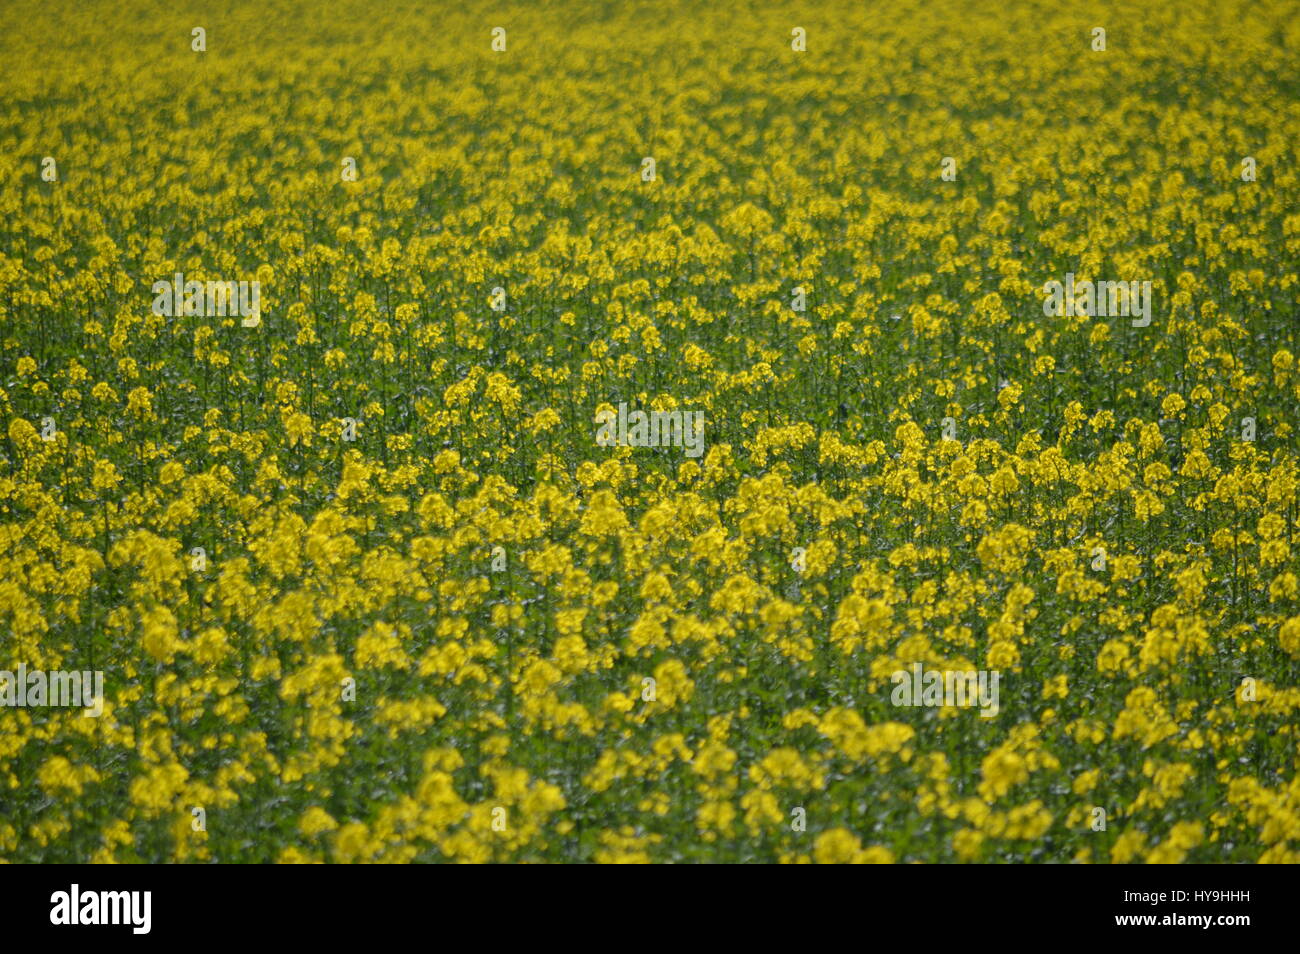 Field full of yellow flowers Stock Photo